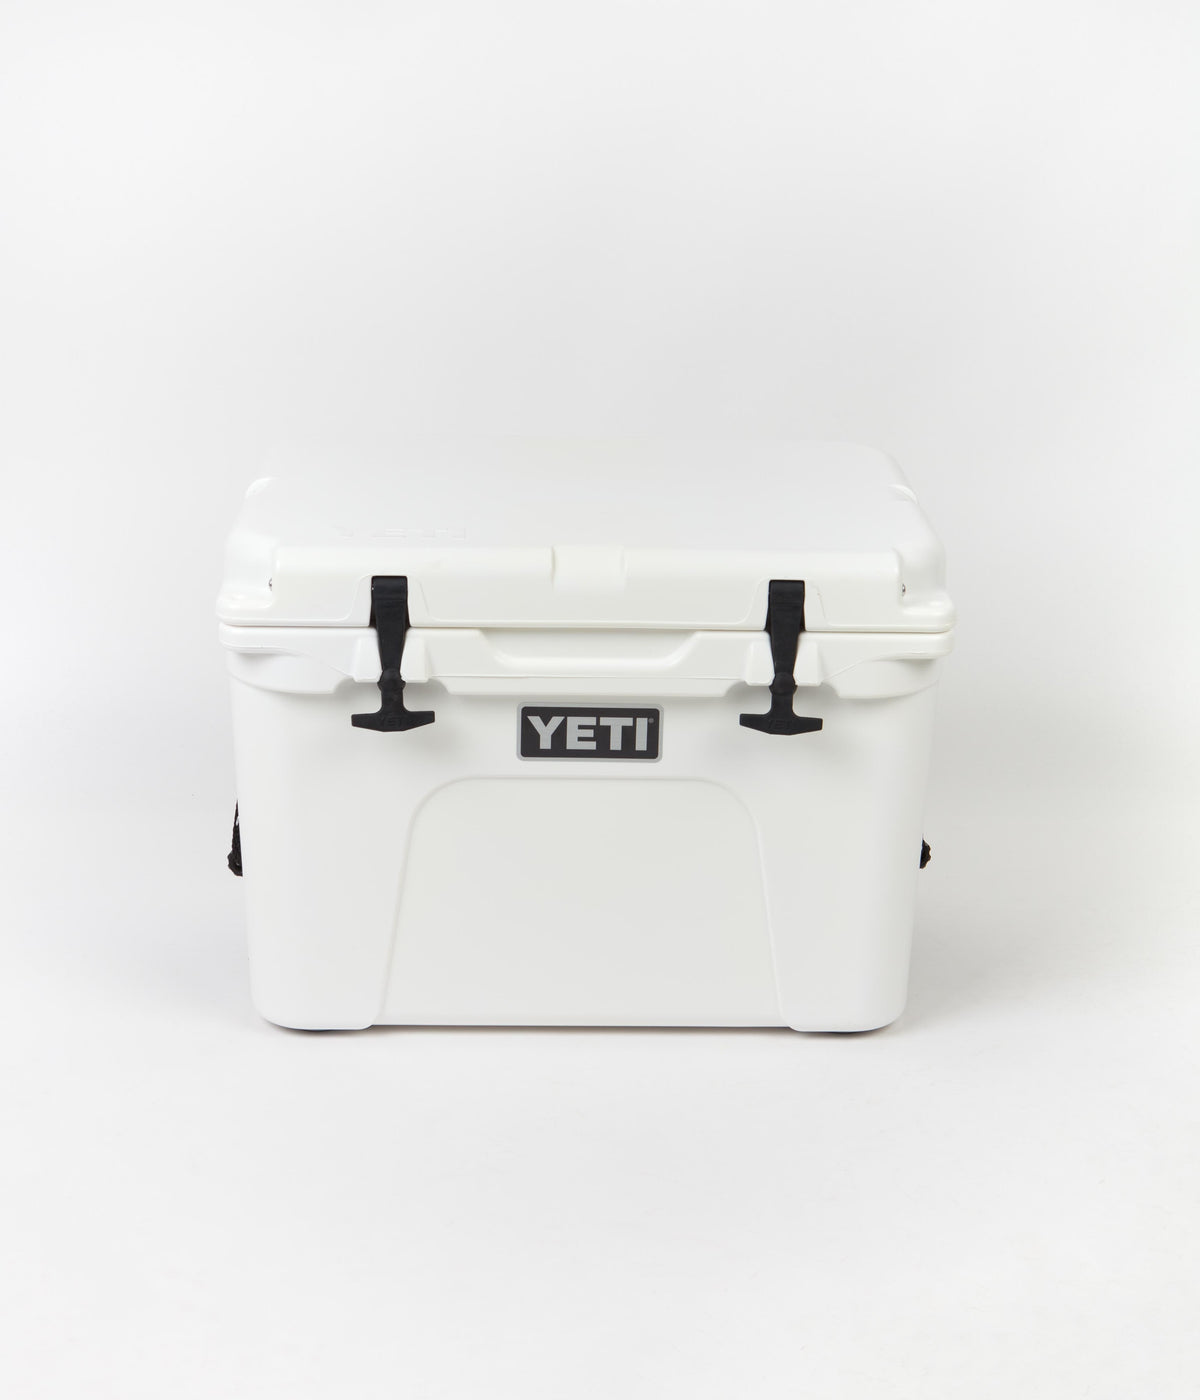 YETI Tundra 45 Insulated Chest Cooler, White at